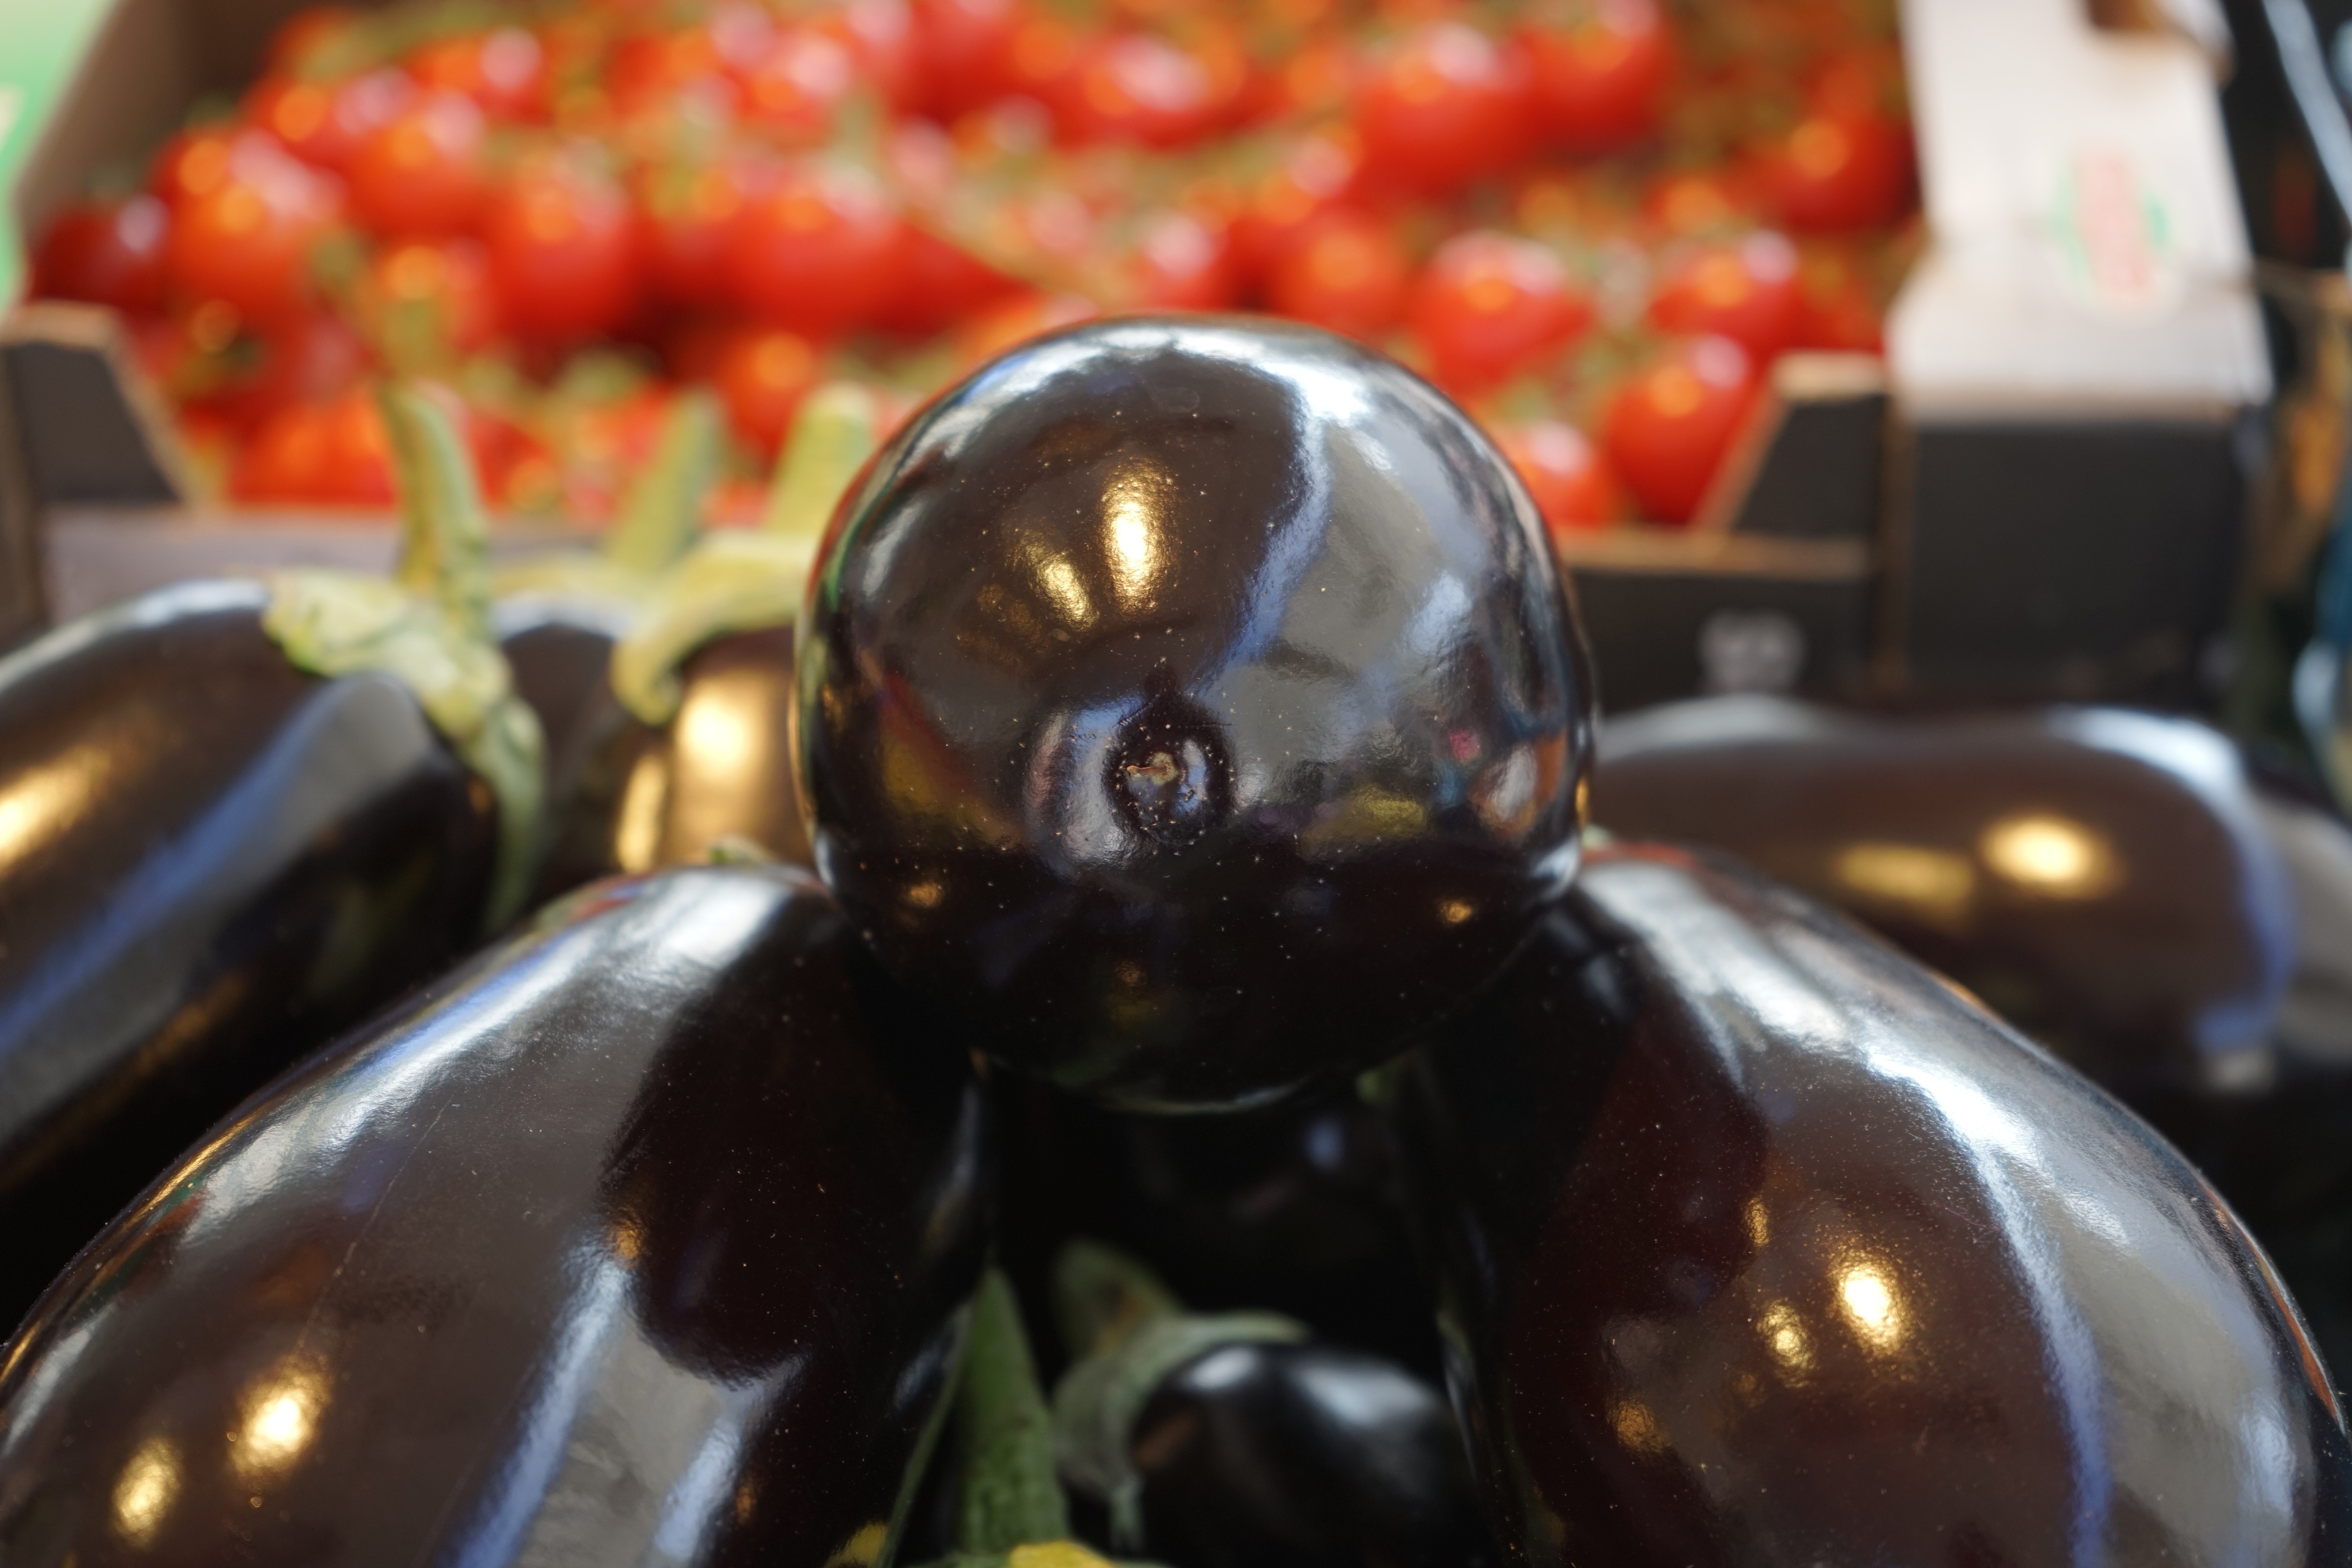 Solanum Melongena, Eggplant, Vegetables, reflection, shiny